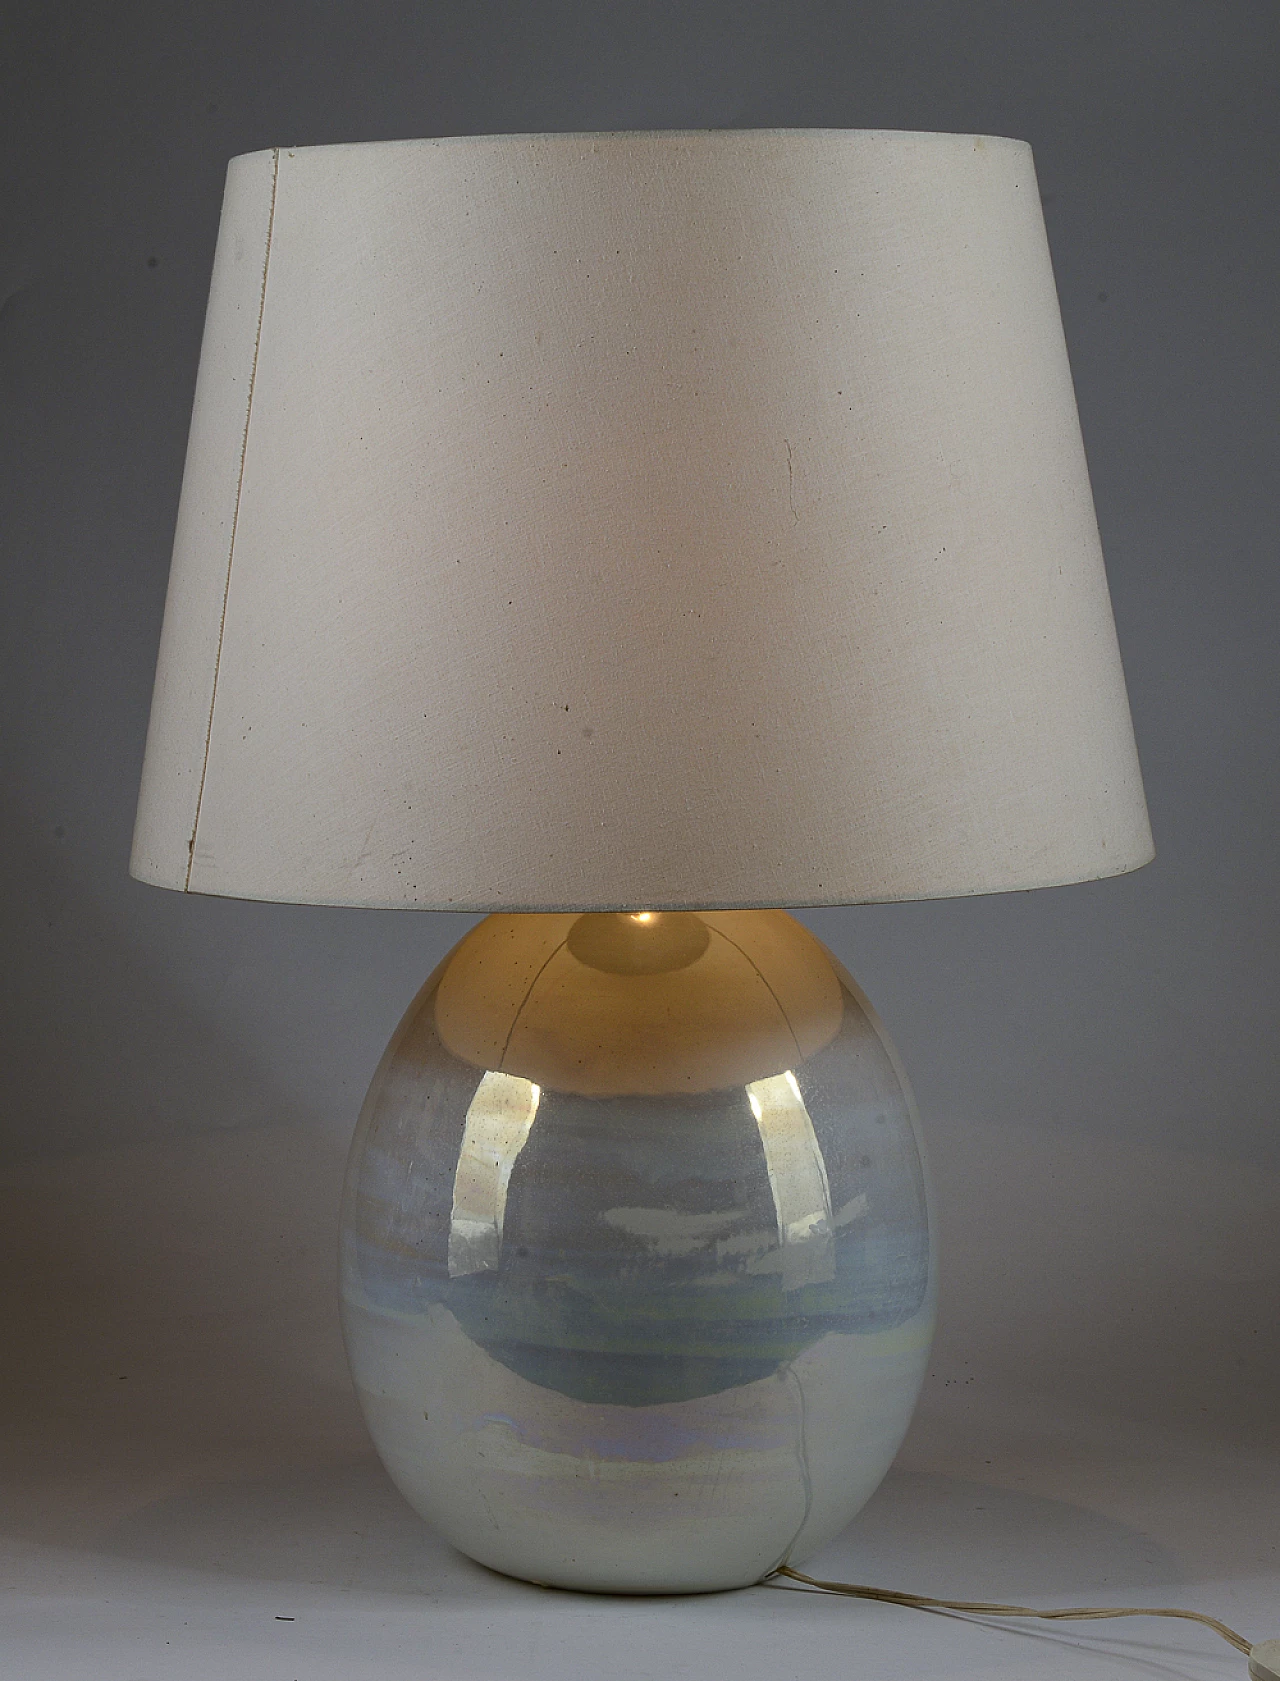 Lampada da tavolo in ceramica perlata bianca cangiante invetriata iridescente, anni '80 1